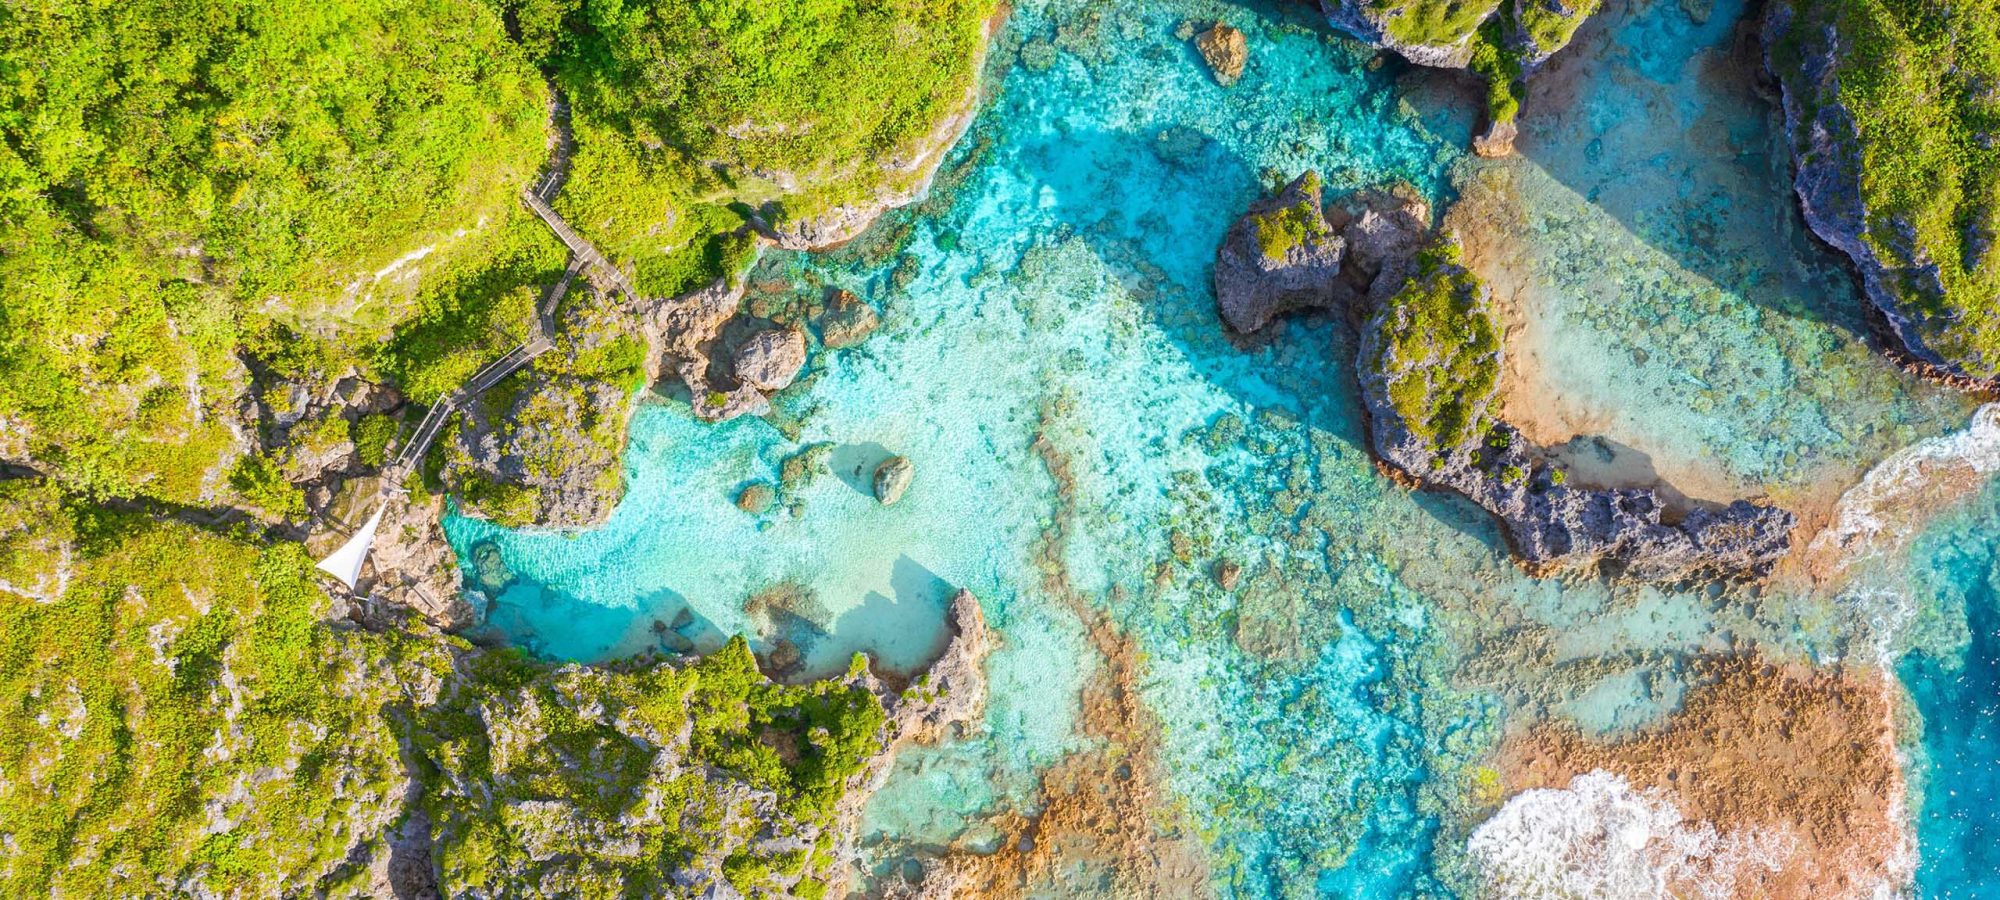 Niue-Island-Limu-Pools-Coast-Ocean-Beach-Scenery-Aerial-Drone-View-6-Banner